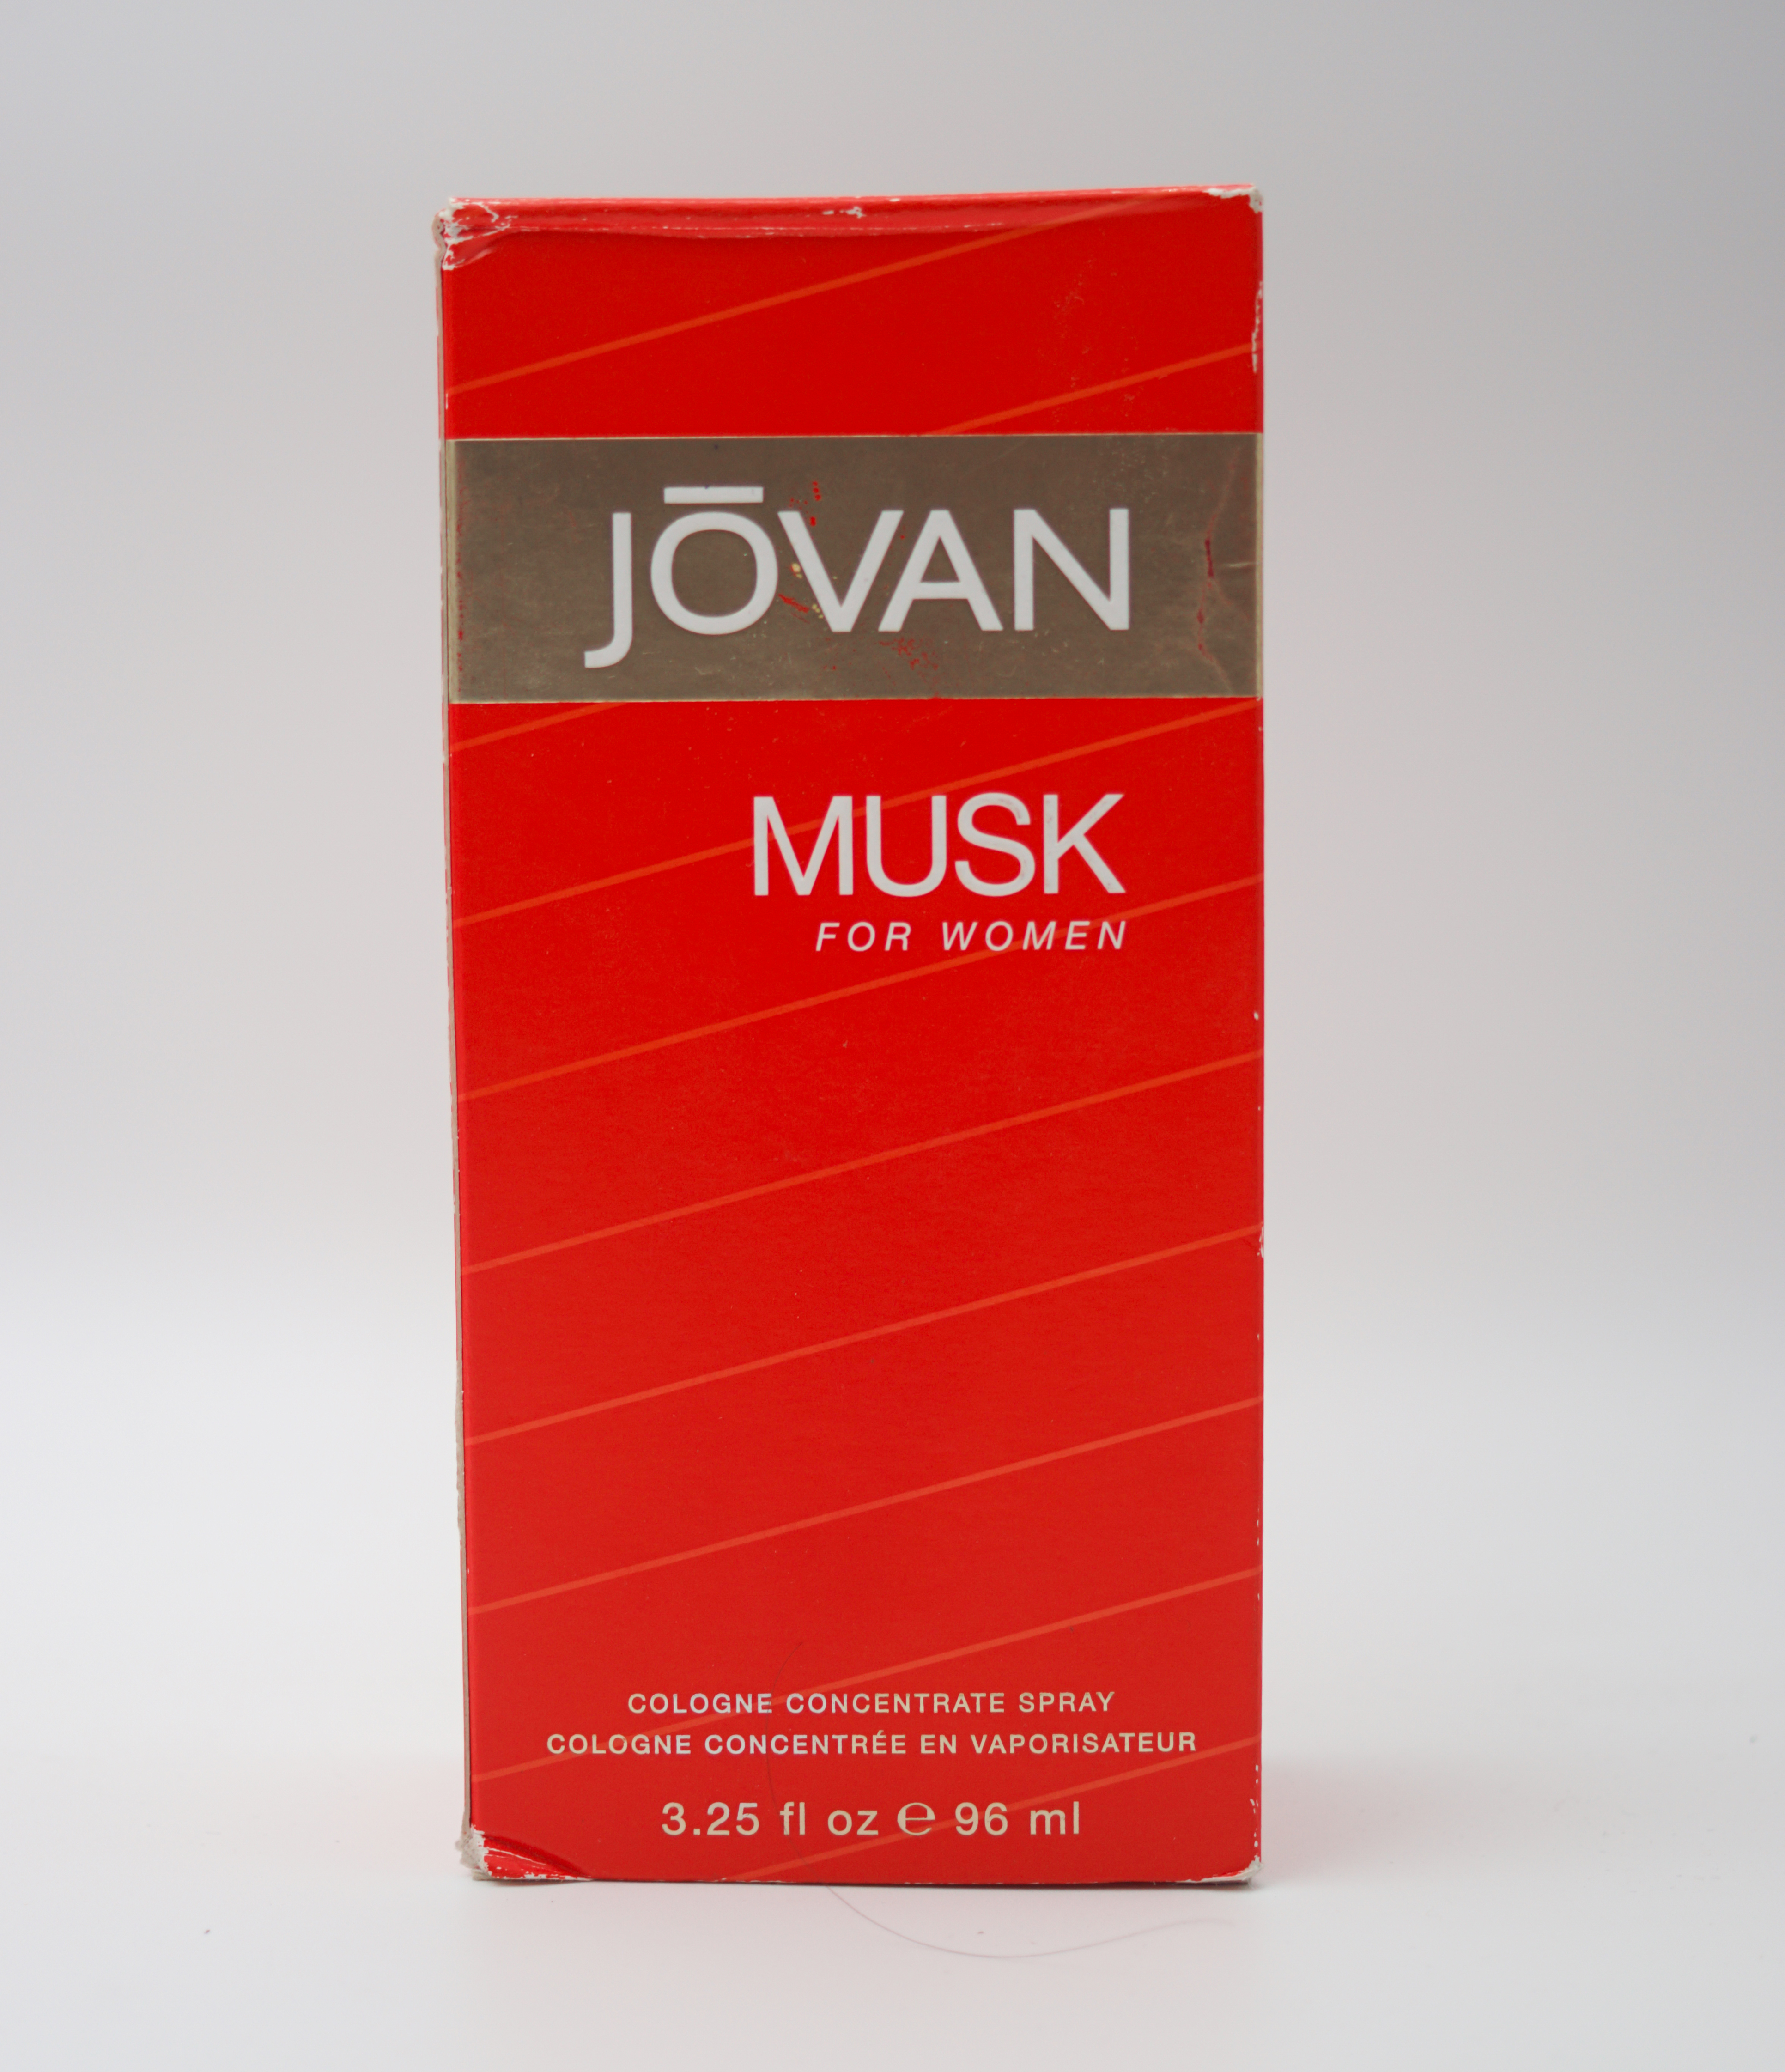 Jovan Musk 96 ml Cologne Concentree En Vaporisateur Spray Orange Color Perfume For Women SKU 96848